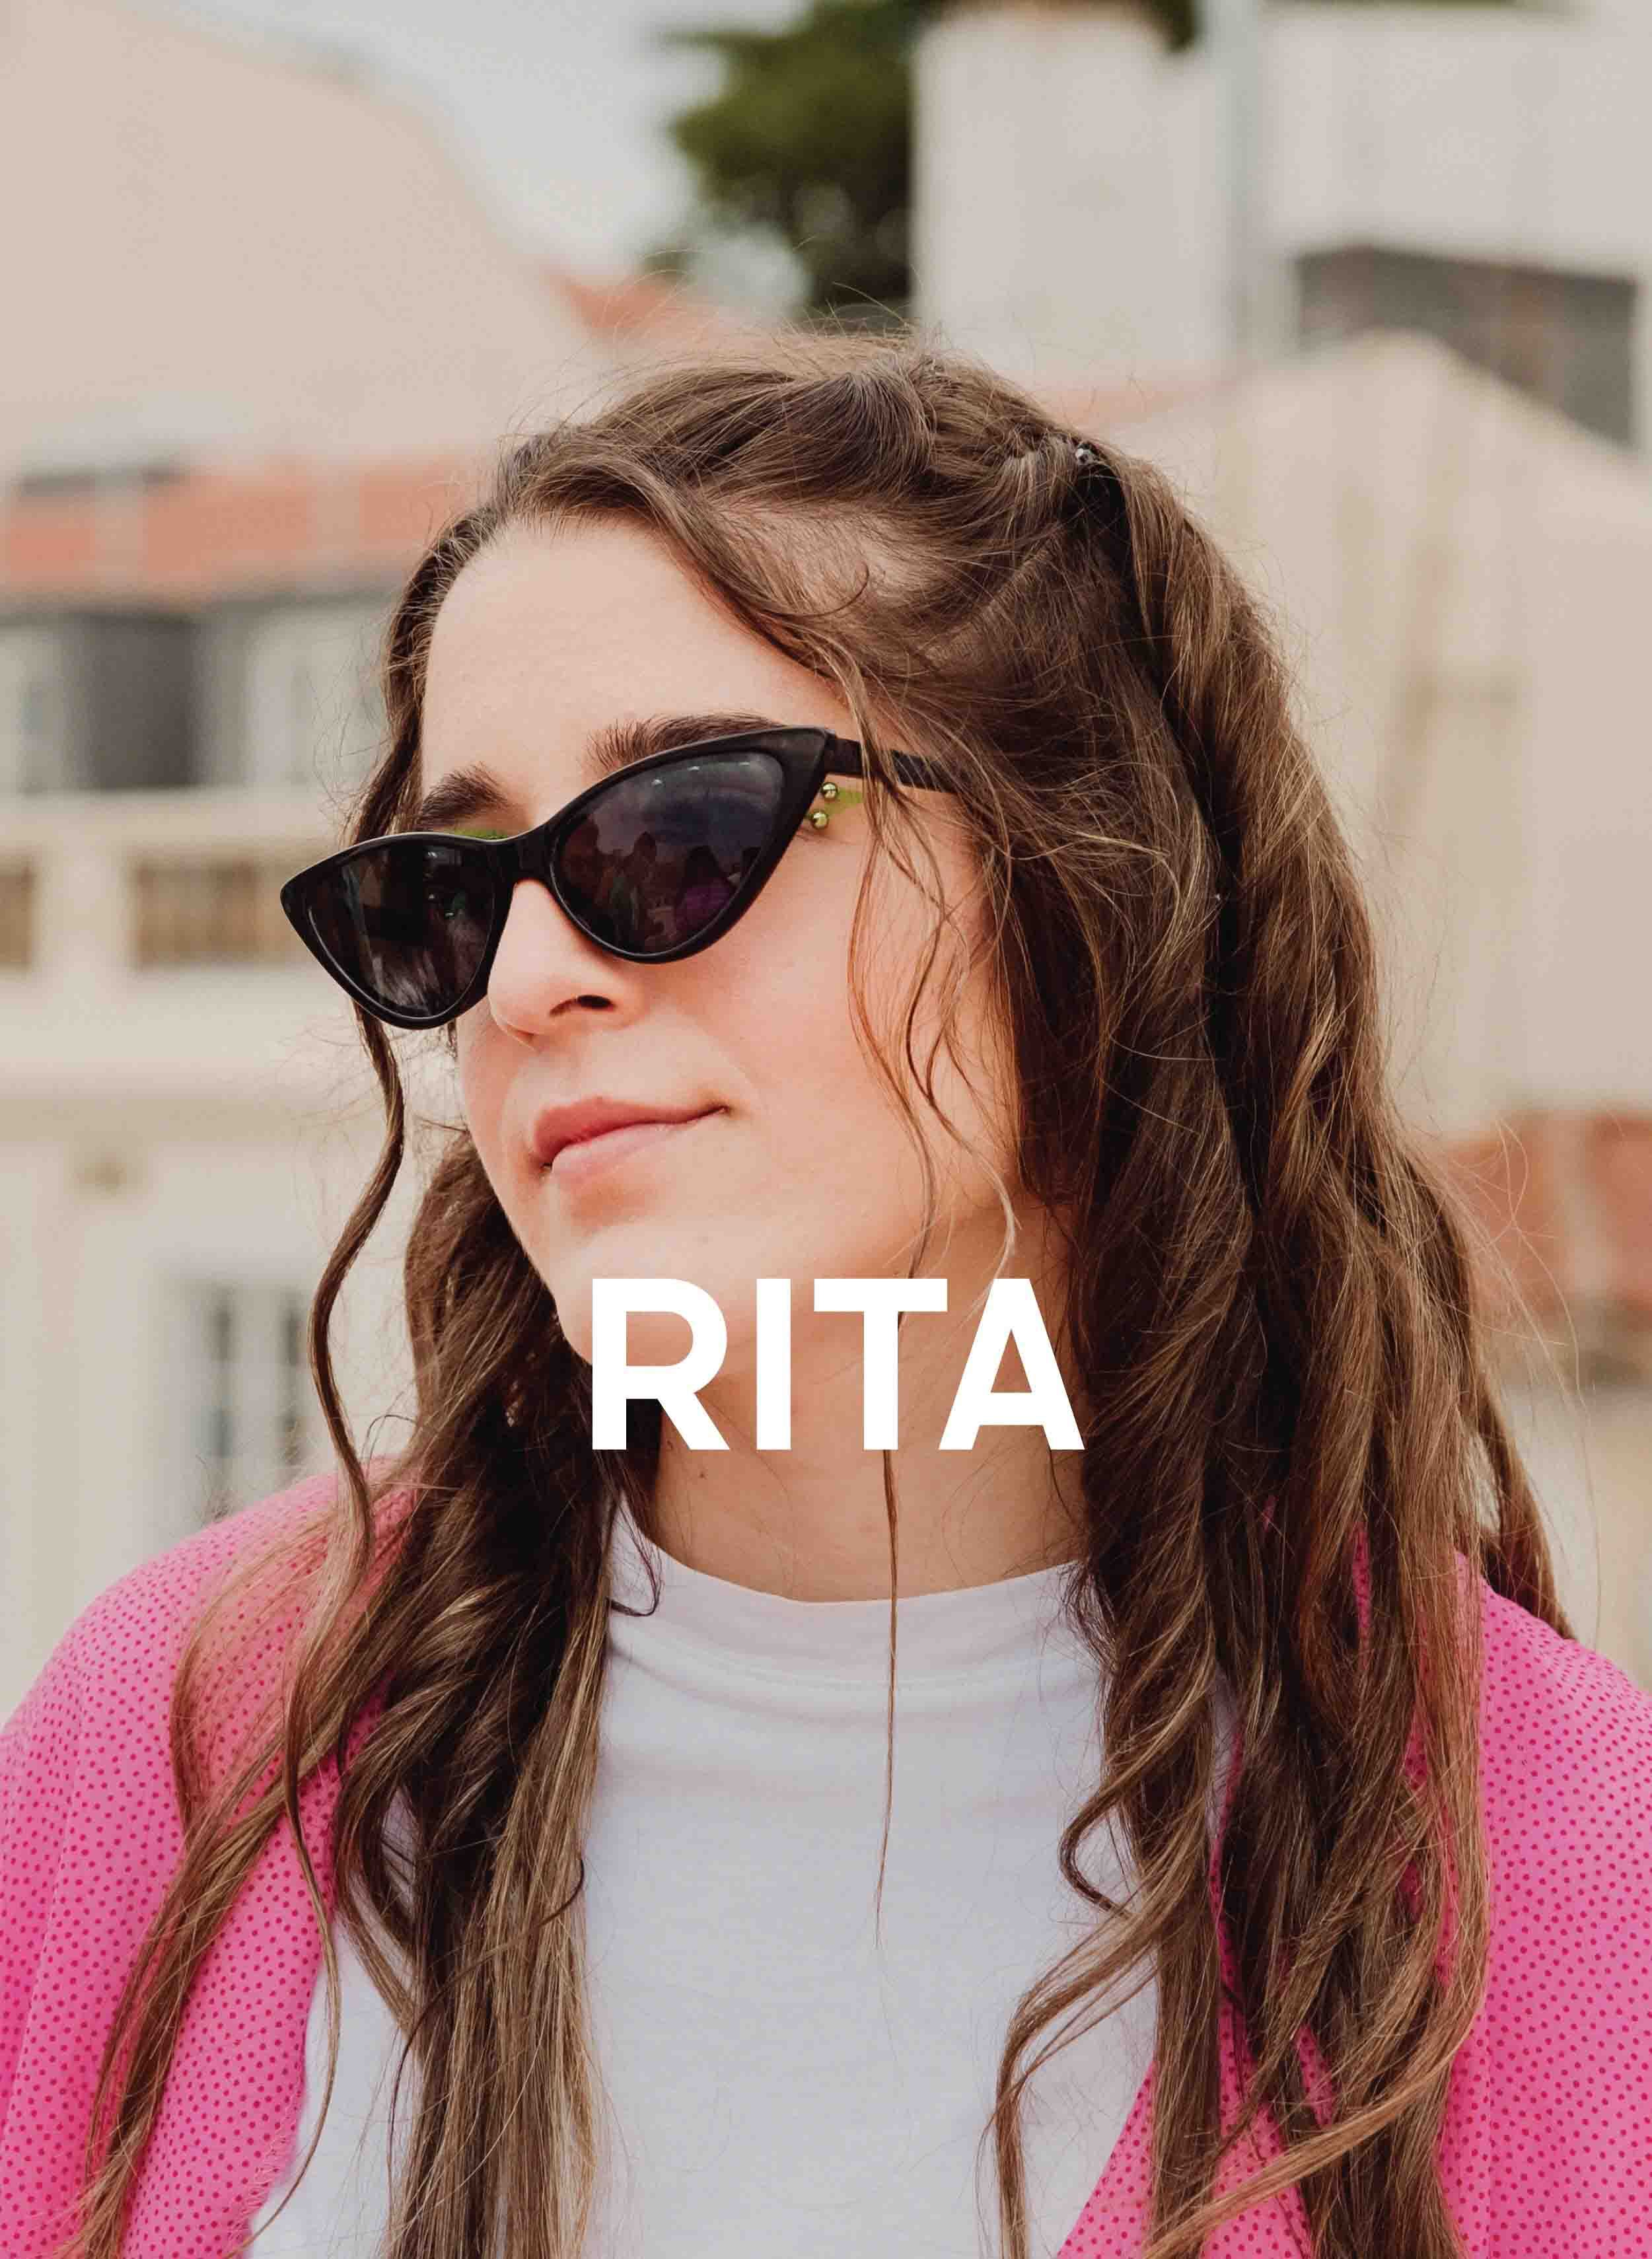 Une photo de Rita.